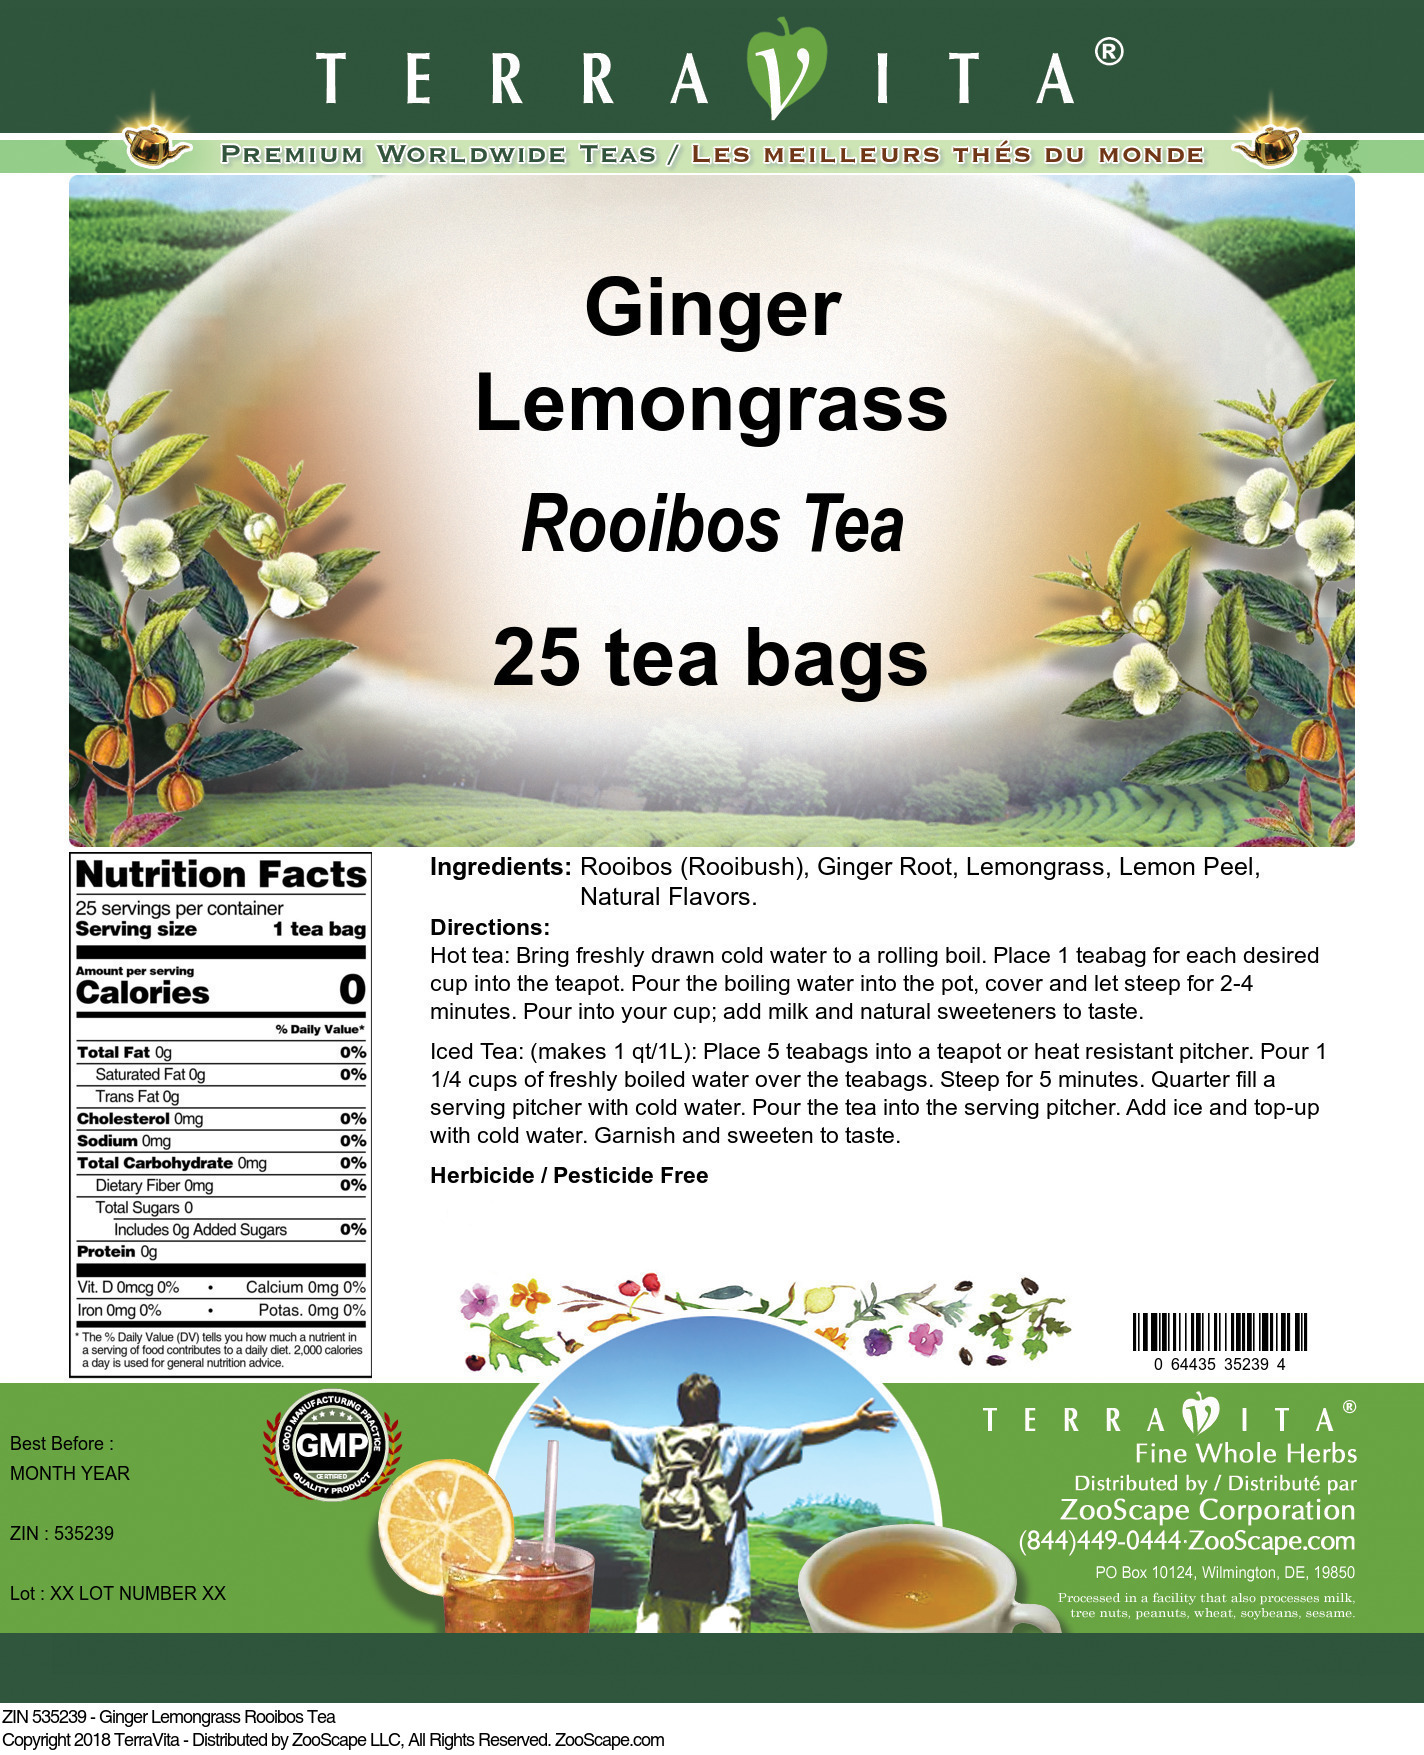 Ginger Lemongrass Rooibos Tea - Label